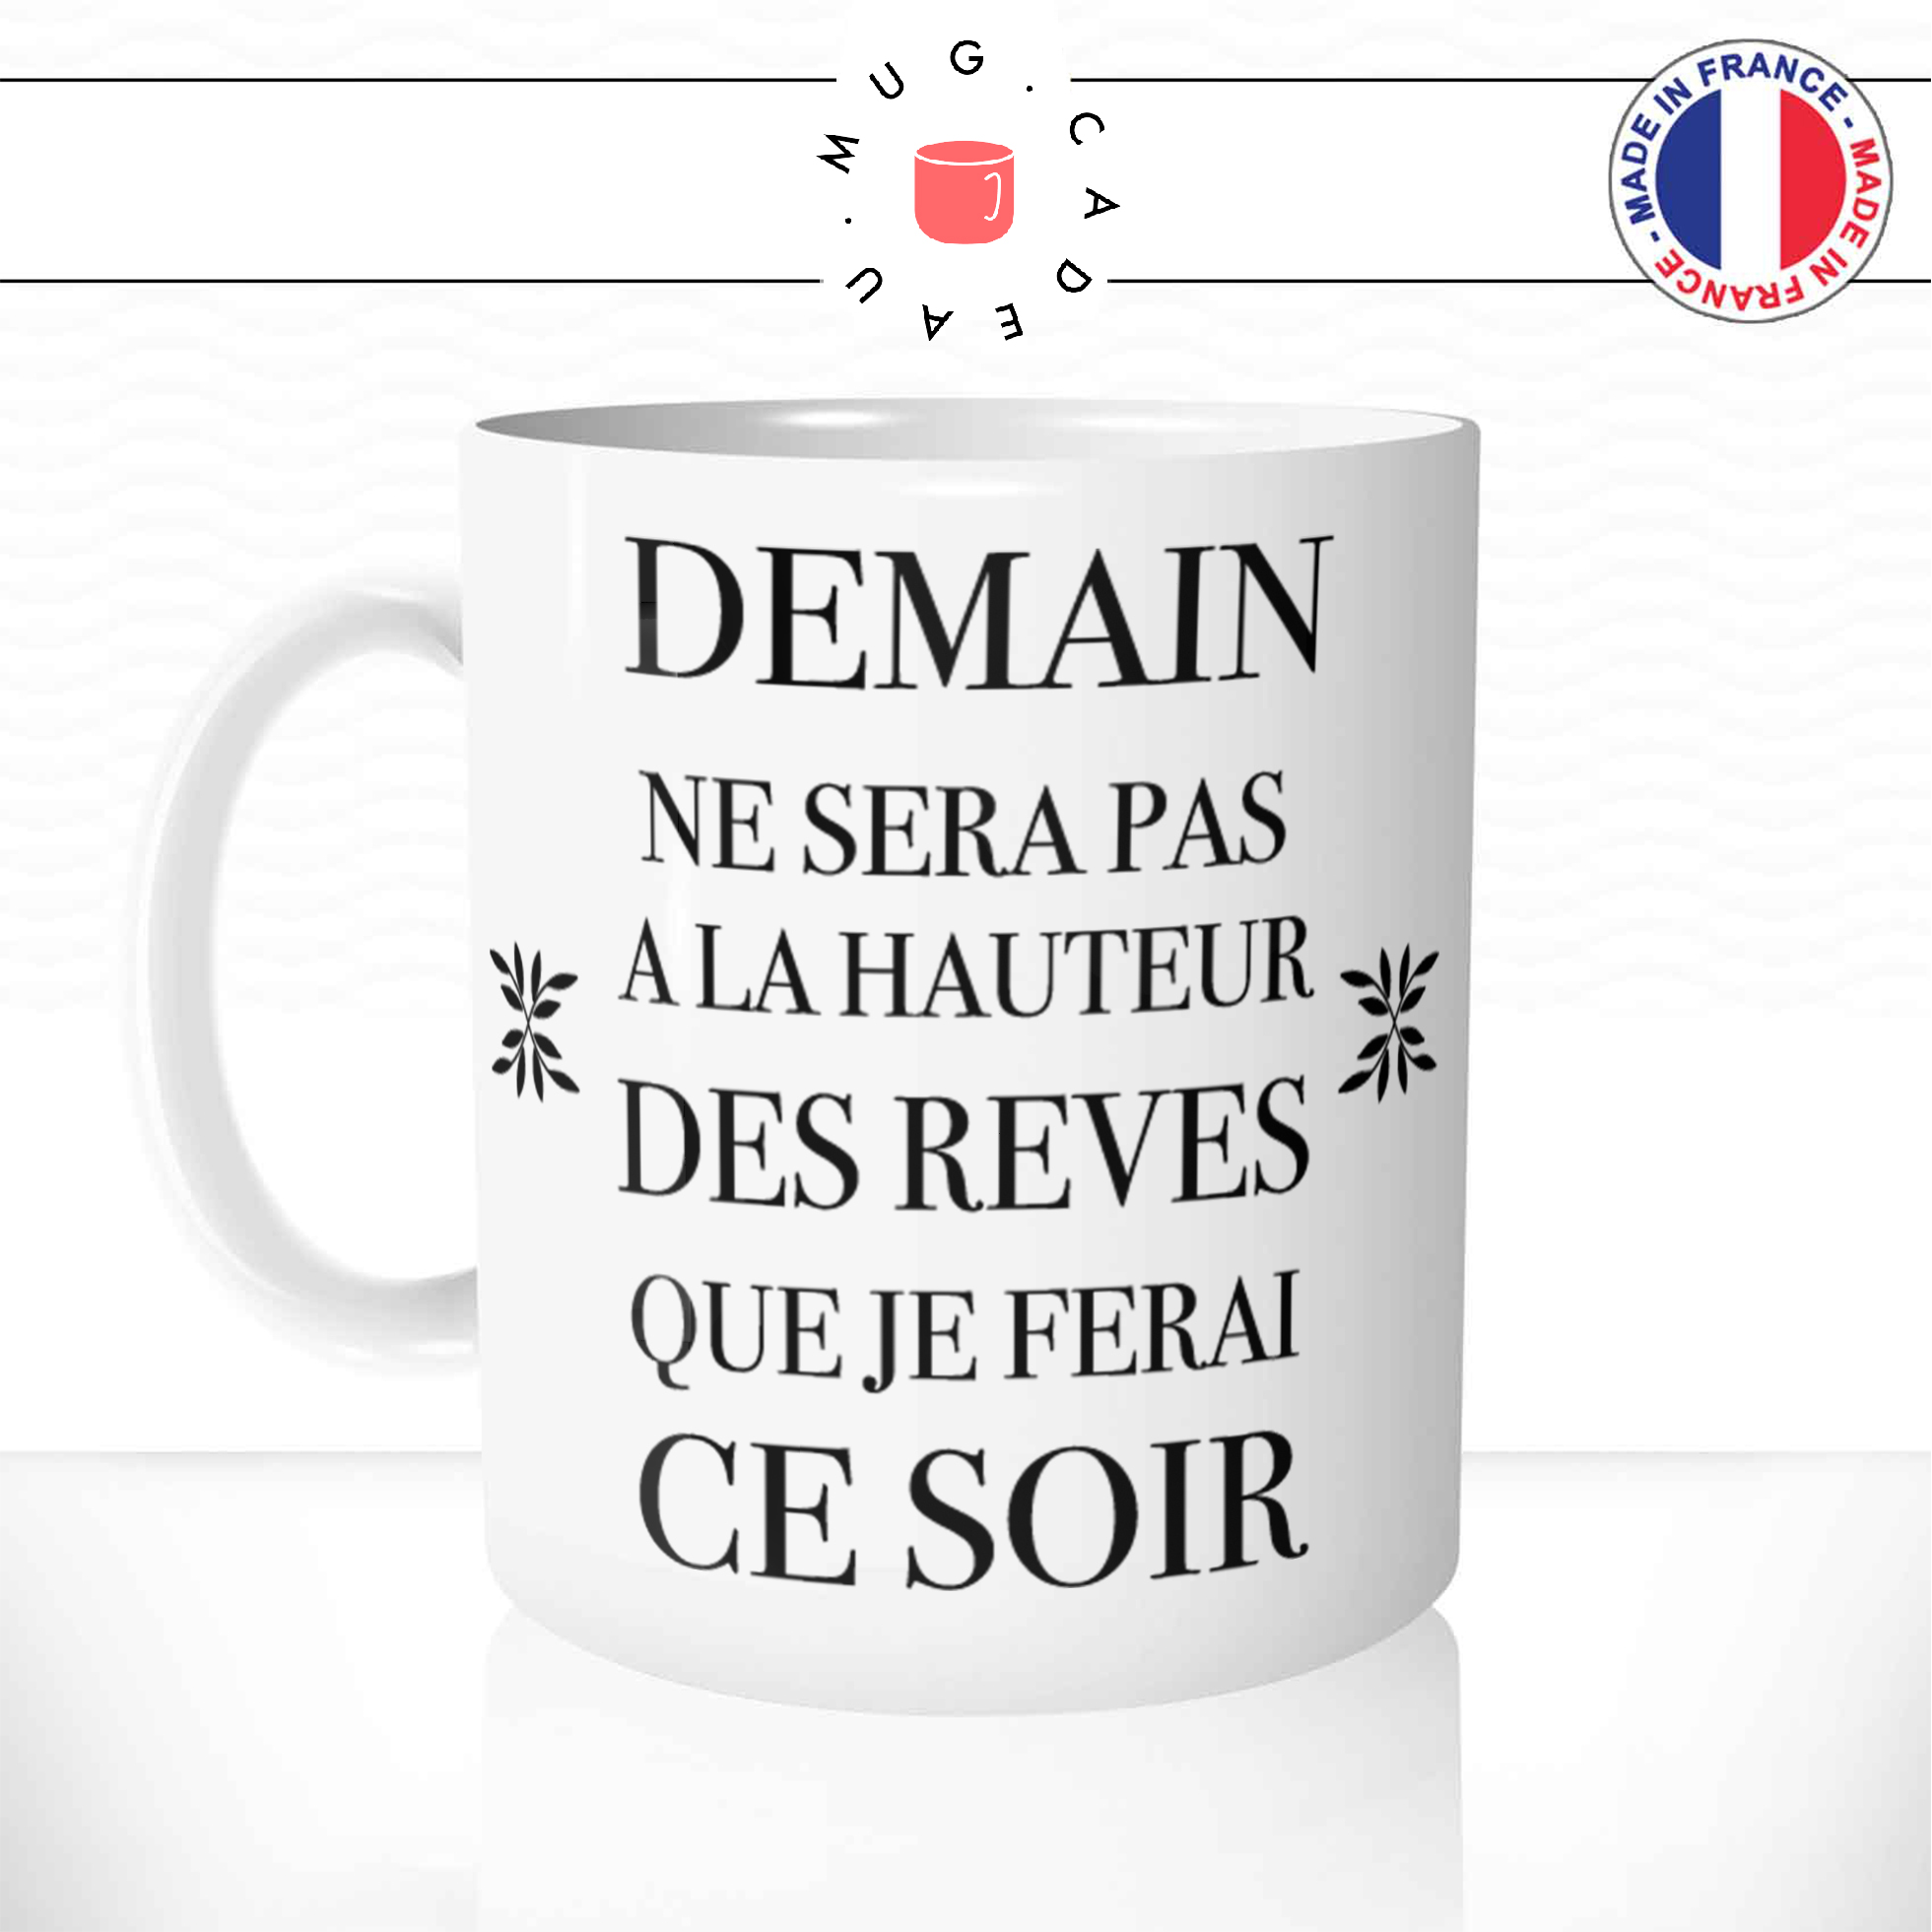 mug-tasse-ref33-citation-heureuse-demain-hauteur-reves-ce-soir-cafe-the-mugs-tasses-personnalise-anse-gauche